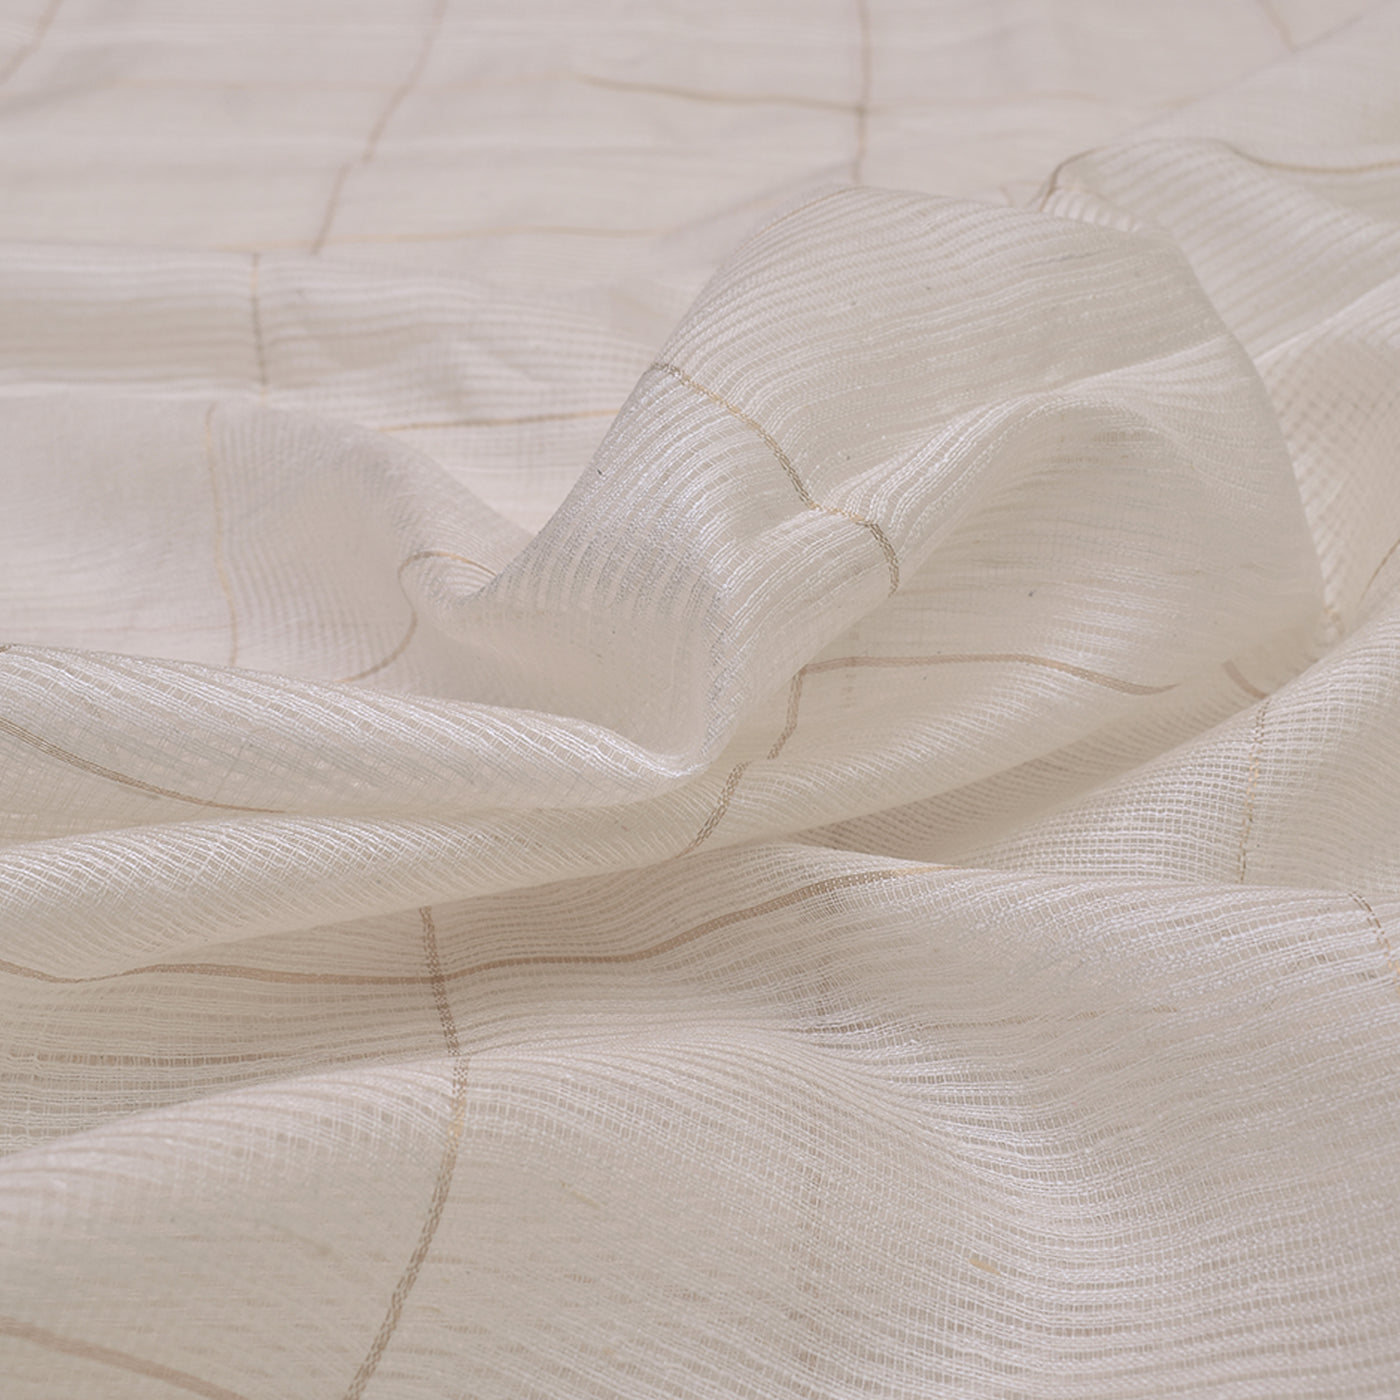 Off White Matka Silk Fabric with Checks Design